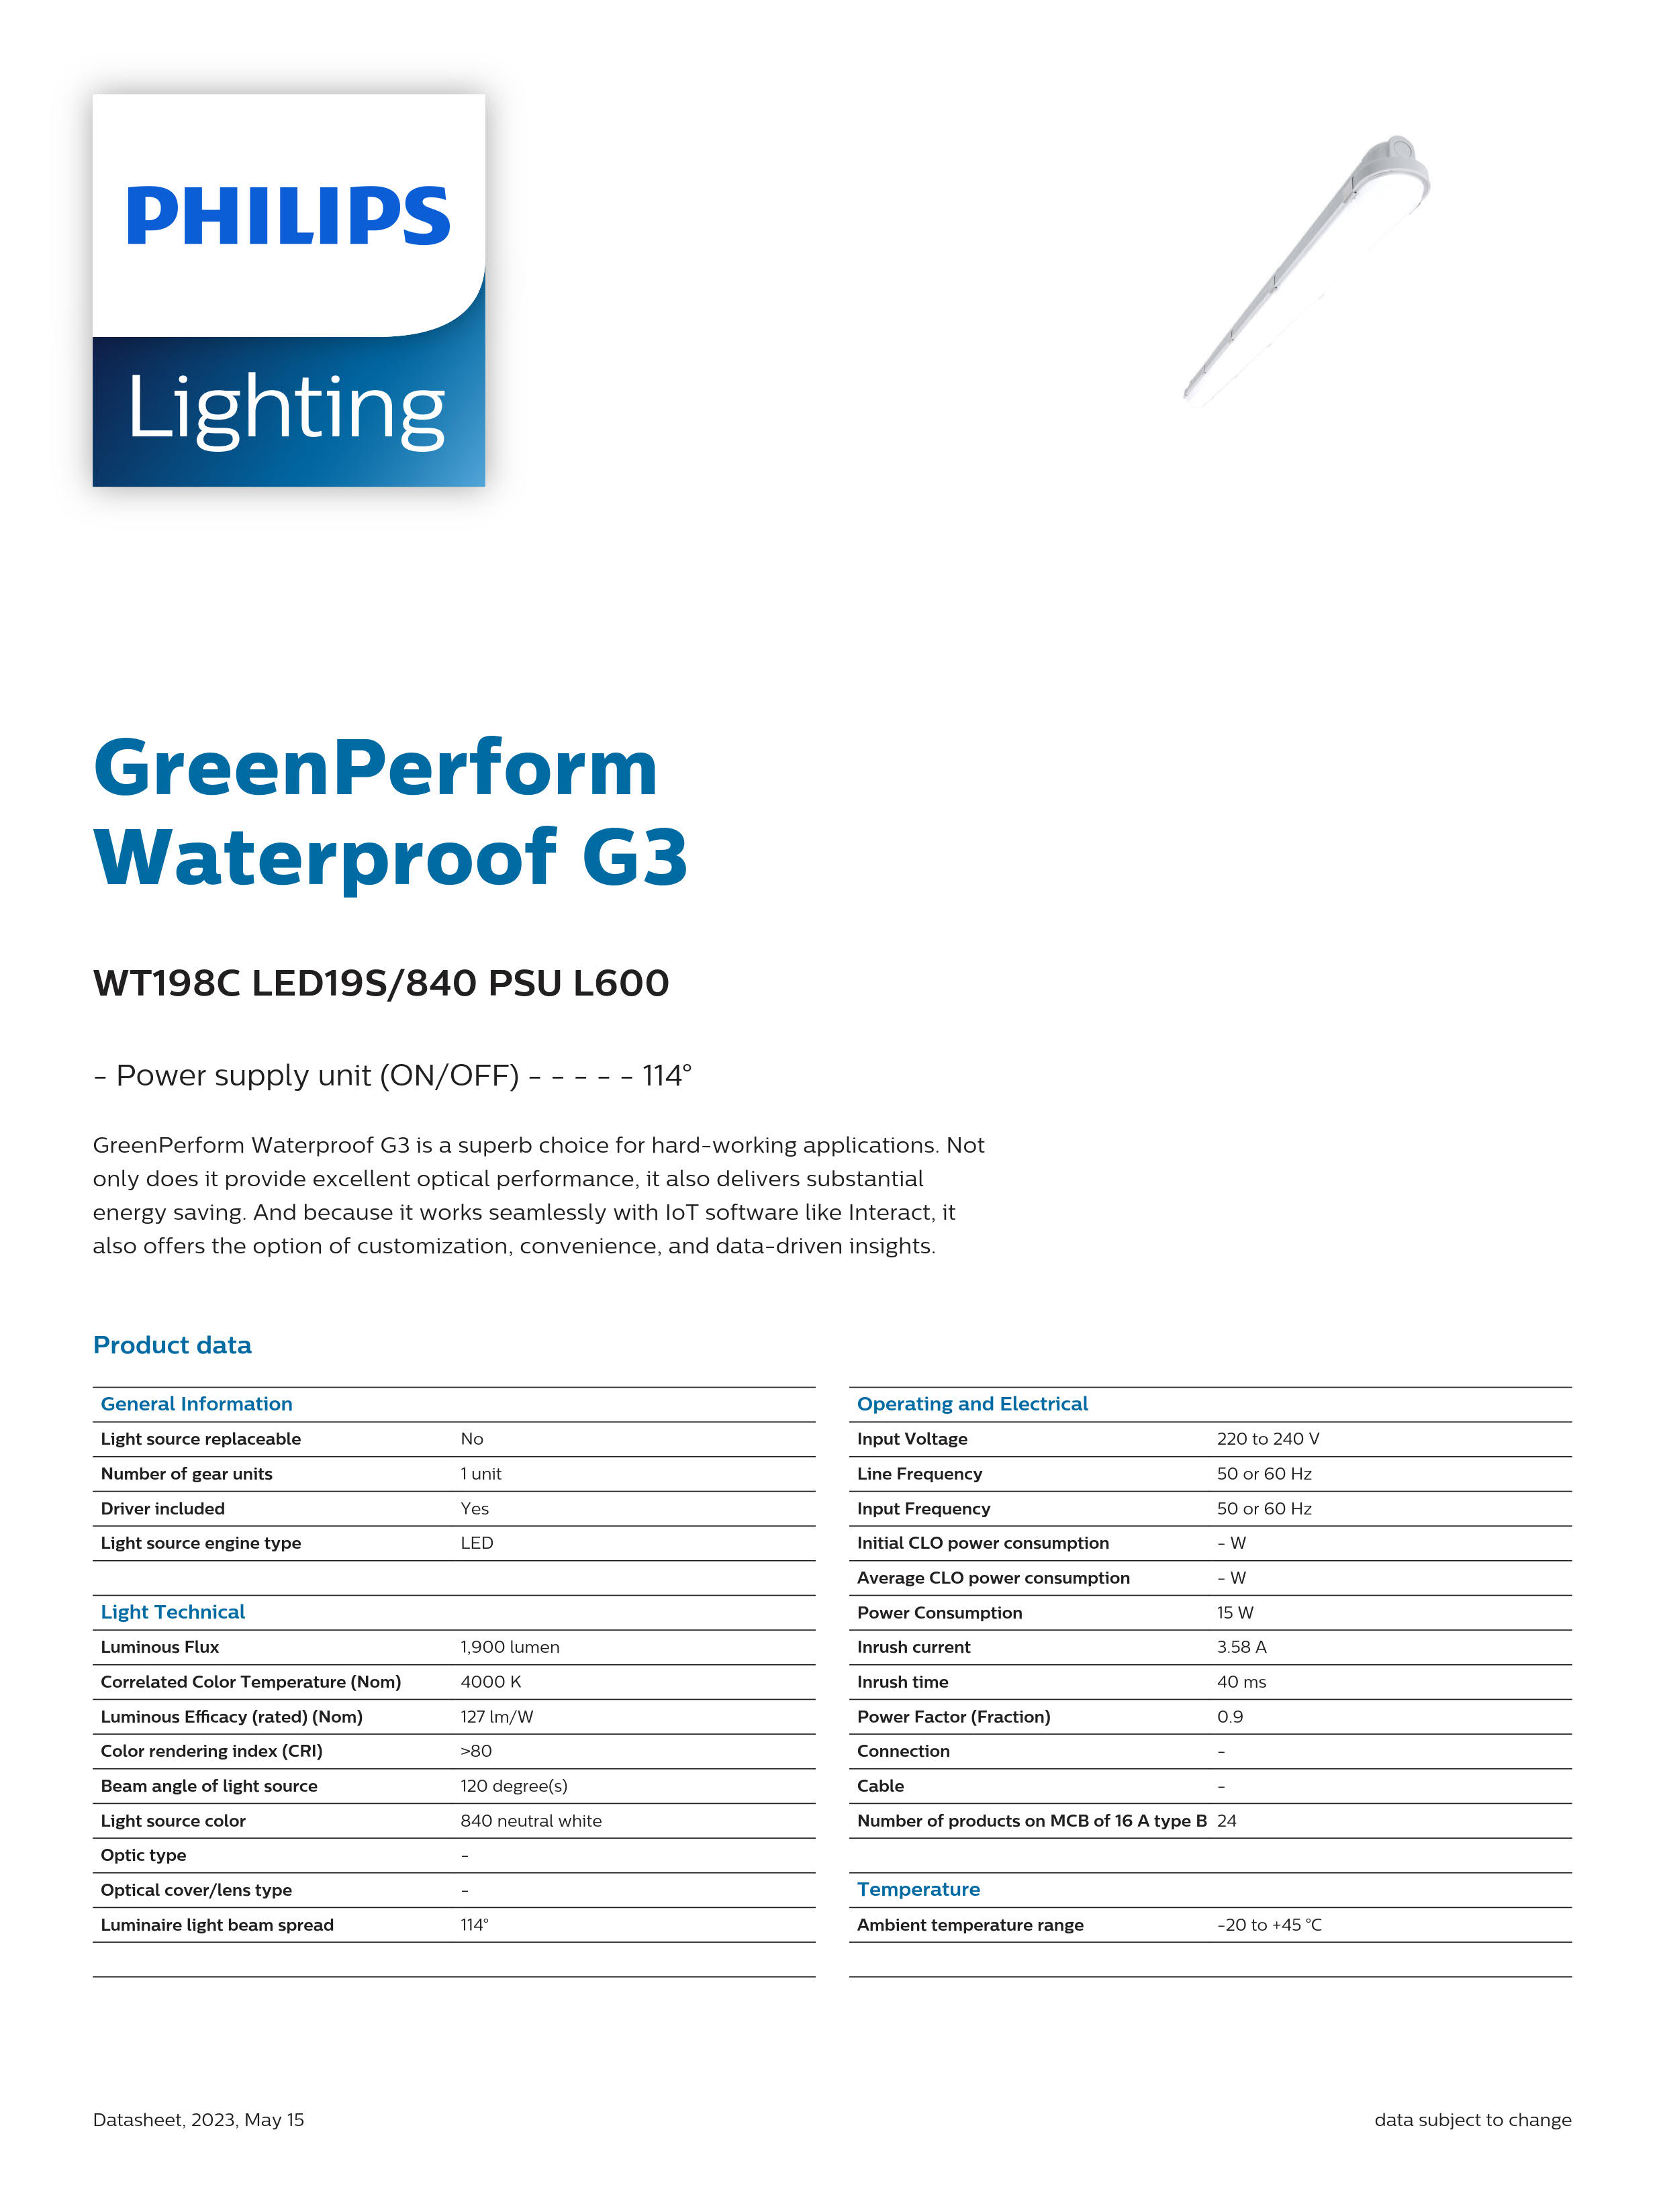 PHILIPS Waterproof WT198C LED19S/840 PSU L600 911401825580